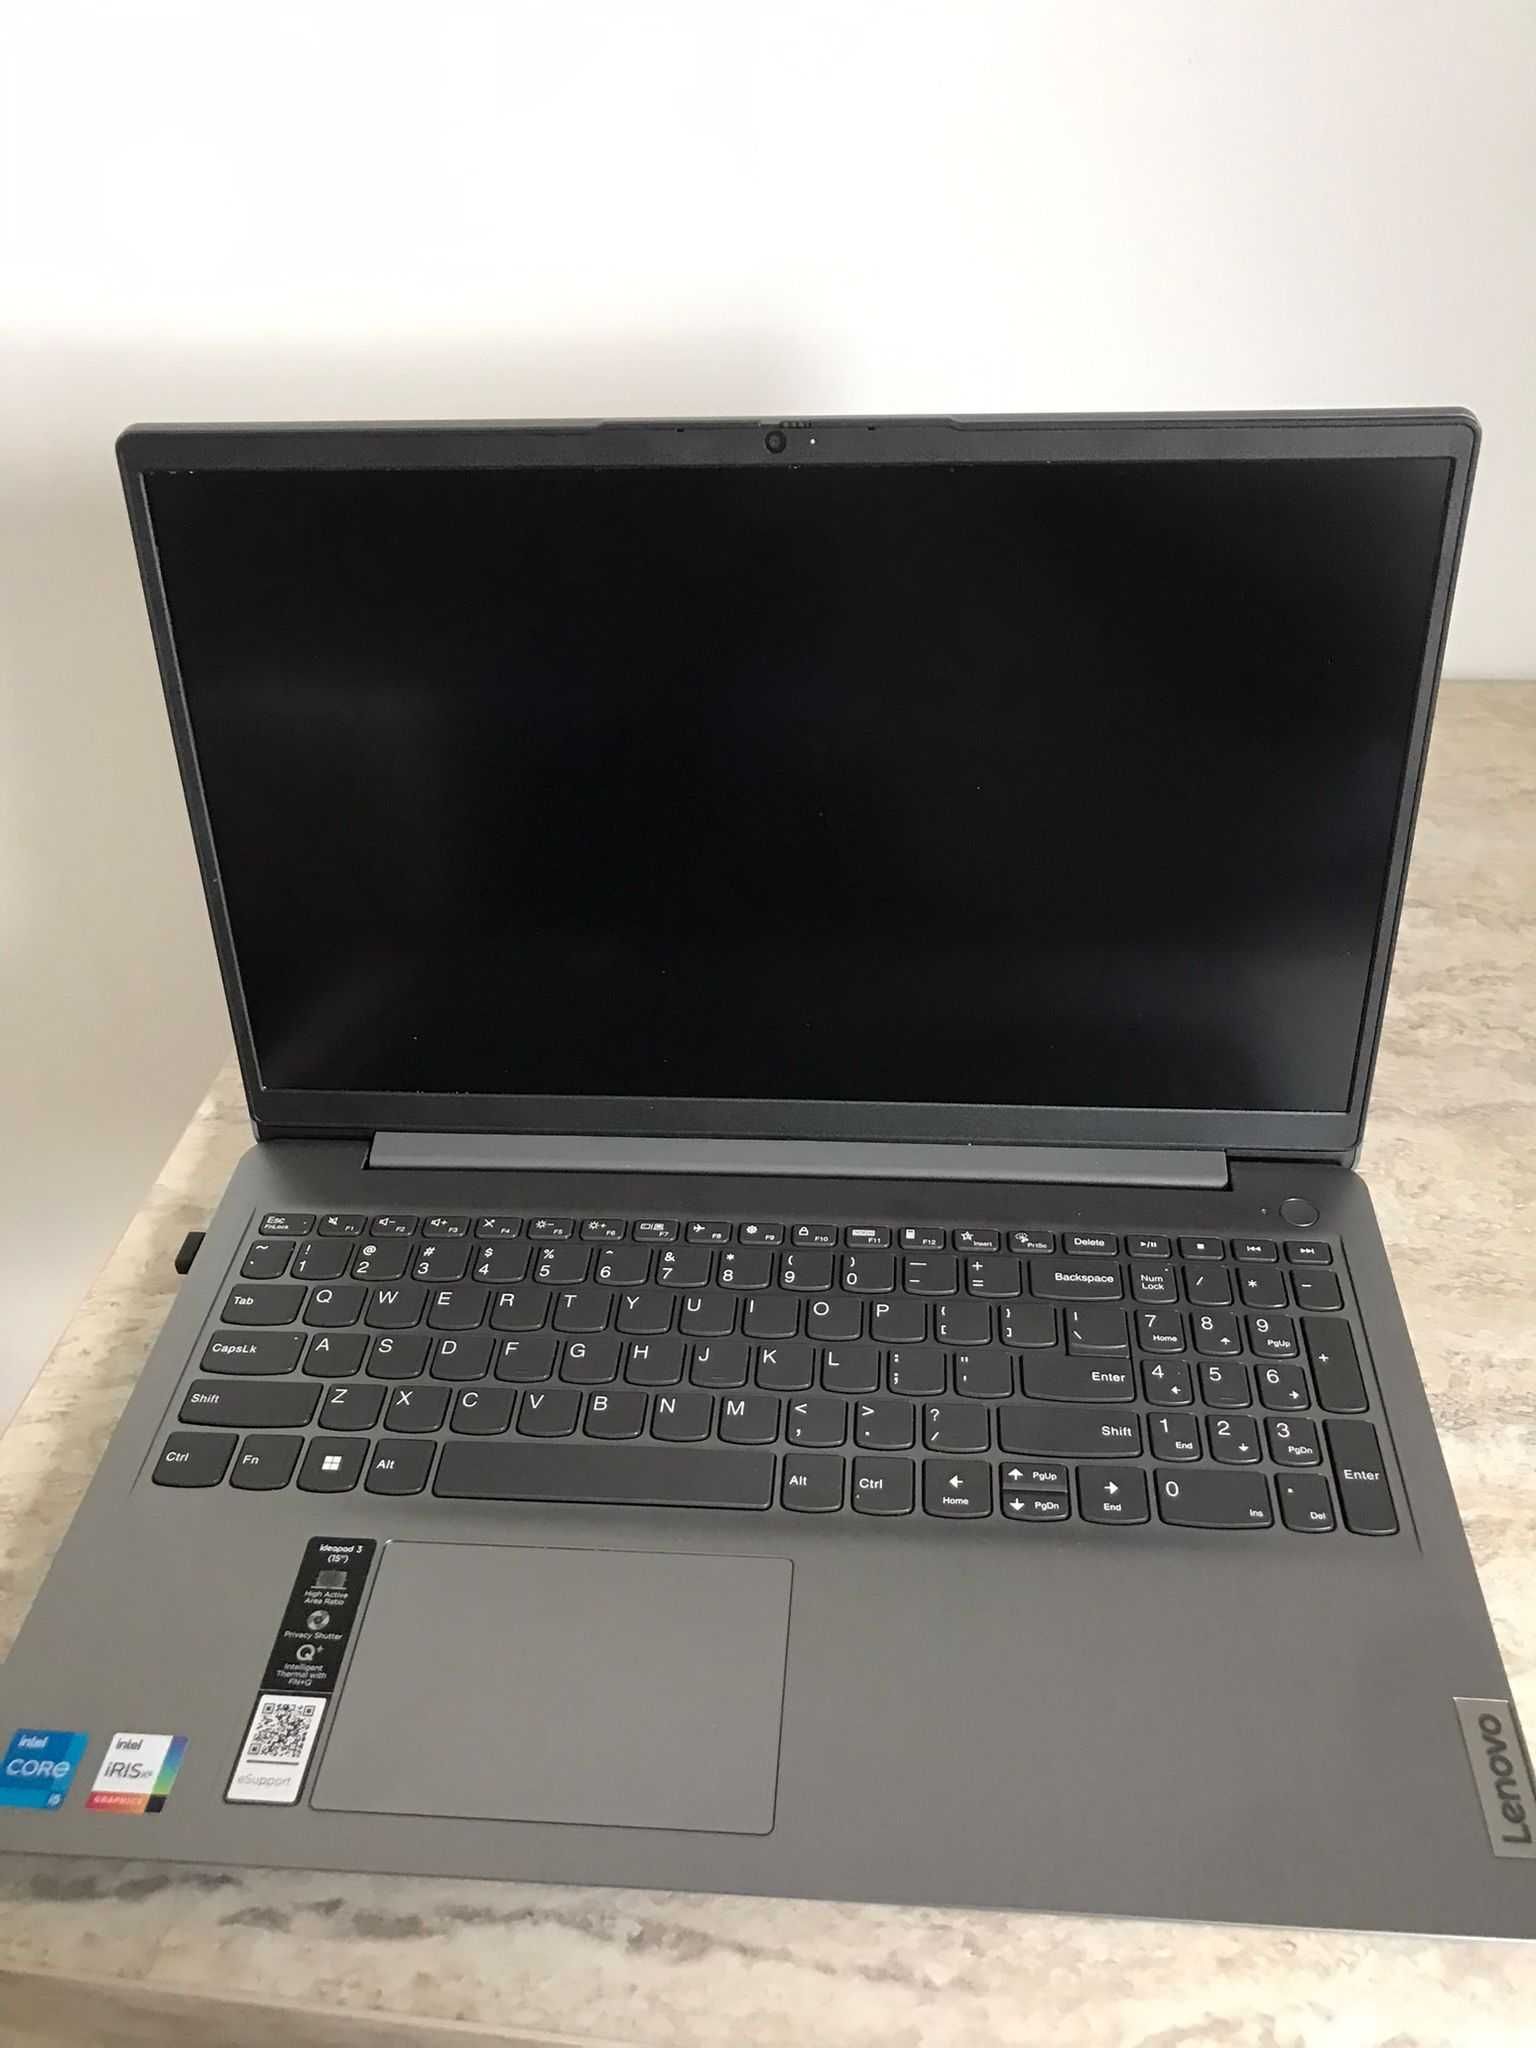 Laptop/notebook Lenovo Ideapad3